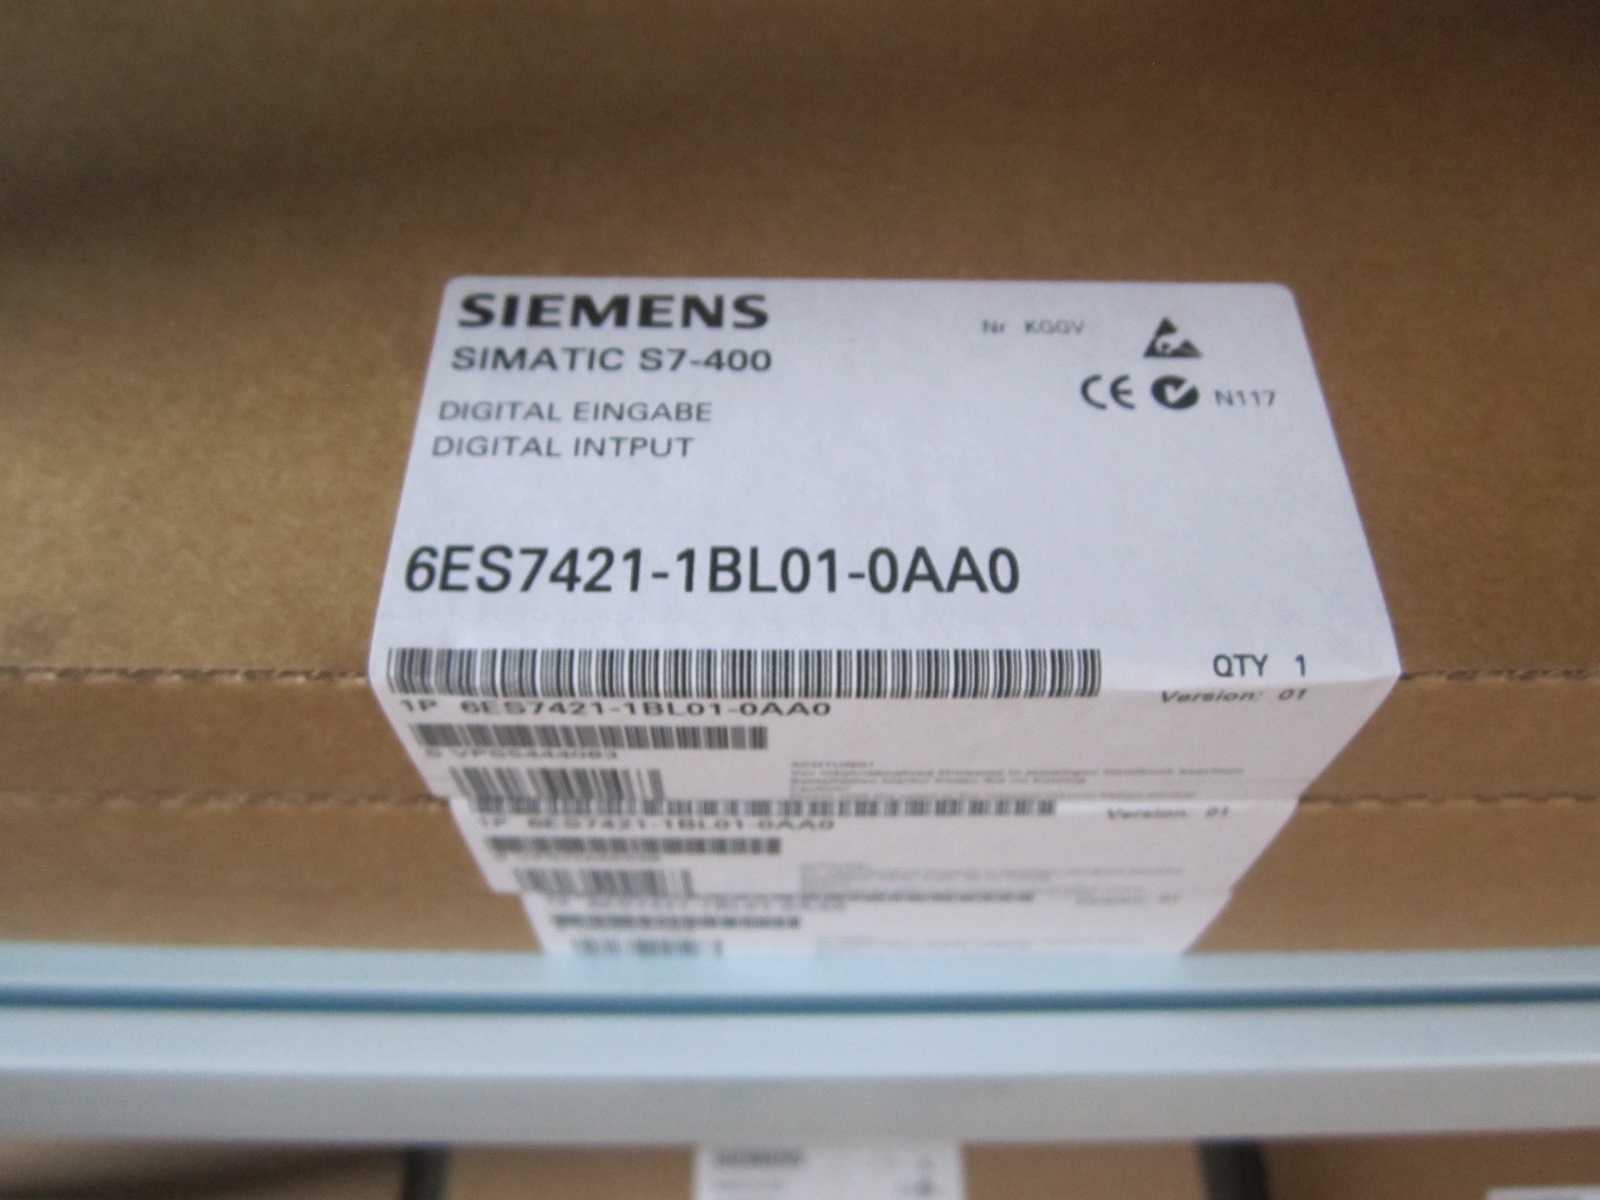 Siemens西门子CP5611网卡代理商